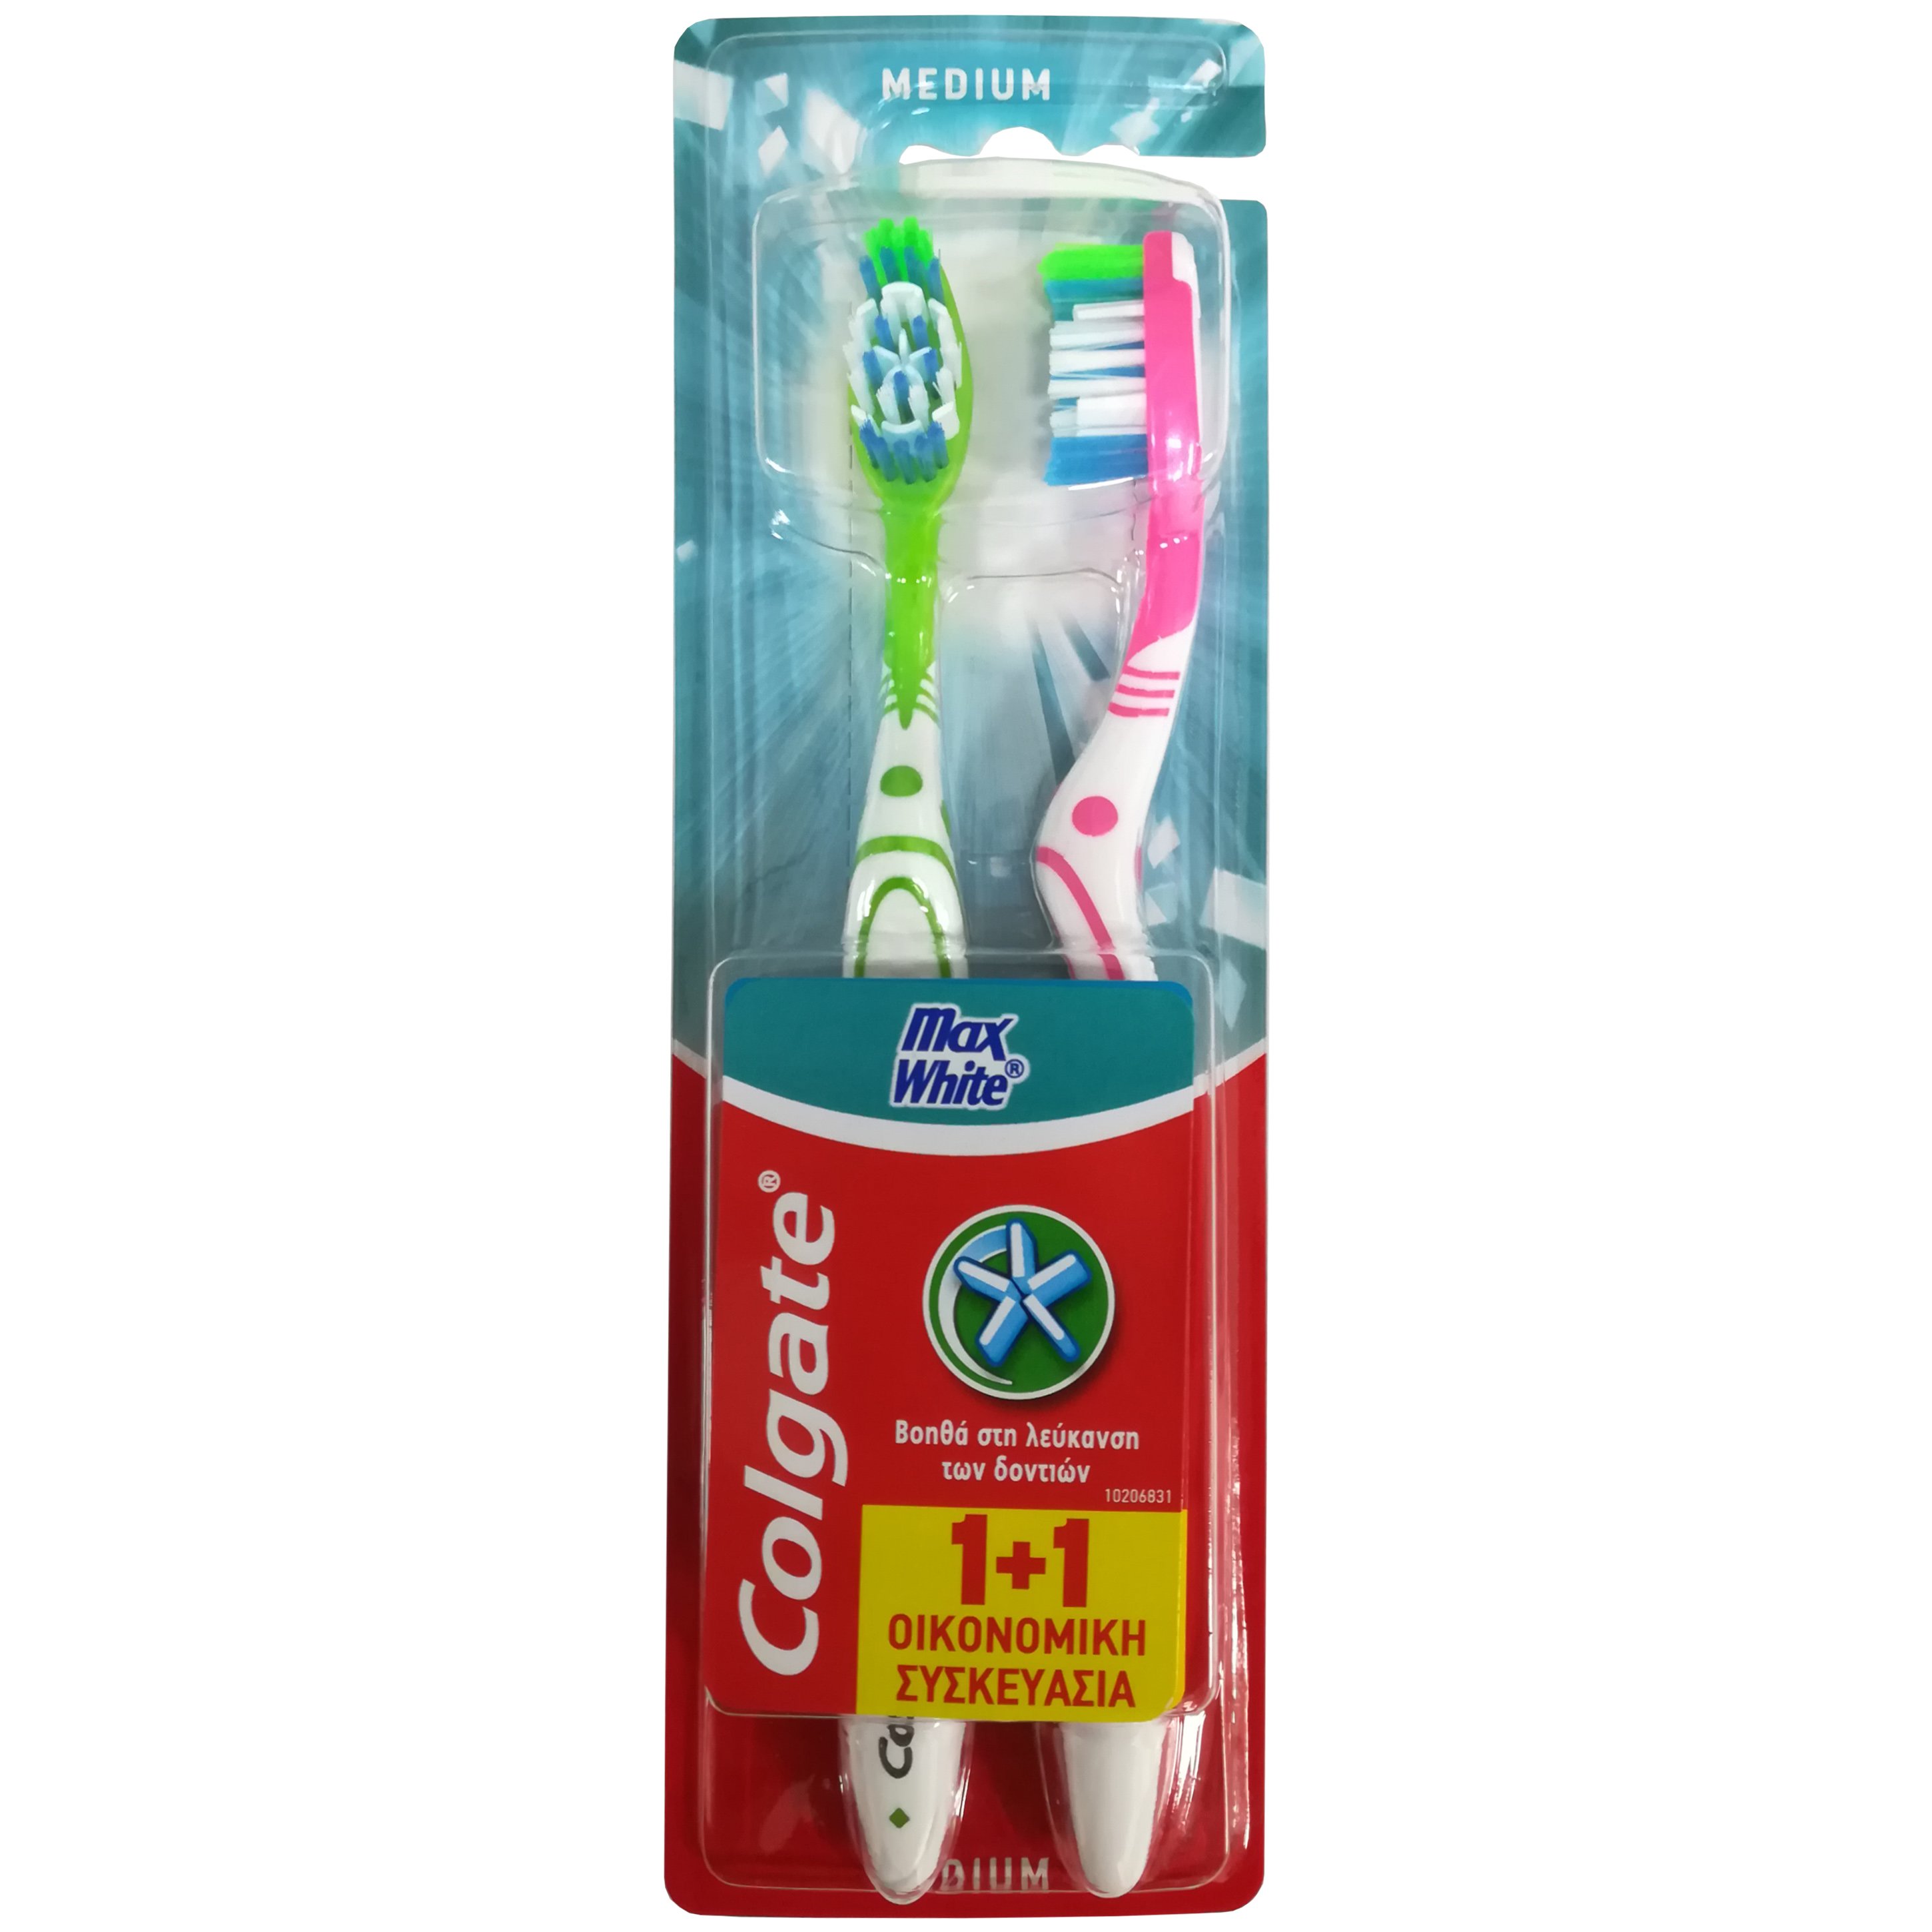 Colgate Max White Medium Toothbrush Μέτρια Οδοντόβουρτσα για Ολοκληρωμένο Καθαρισμό & Απομάκρυνση των Χρωματικών Λεκέδων 2 Τεμάχια – Πράσινο / Ροζ